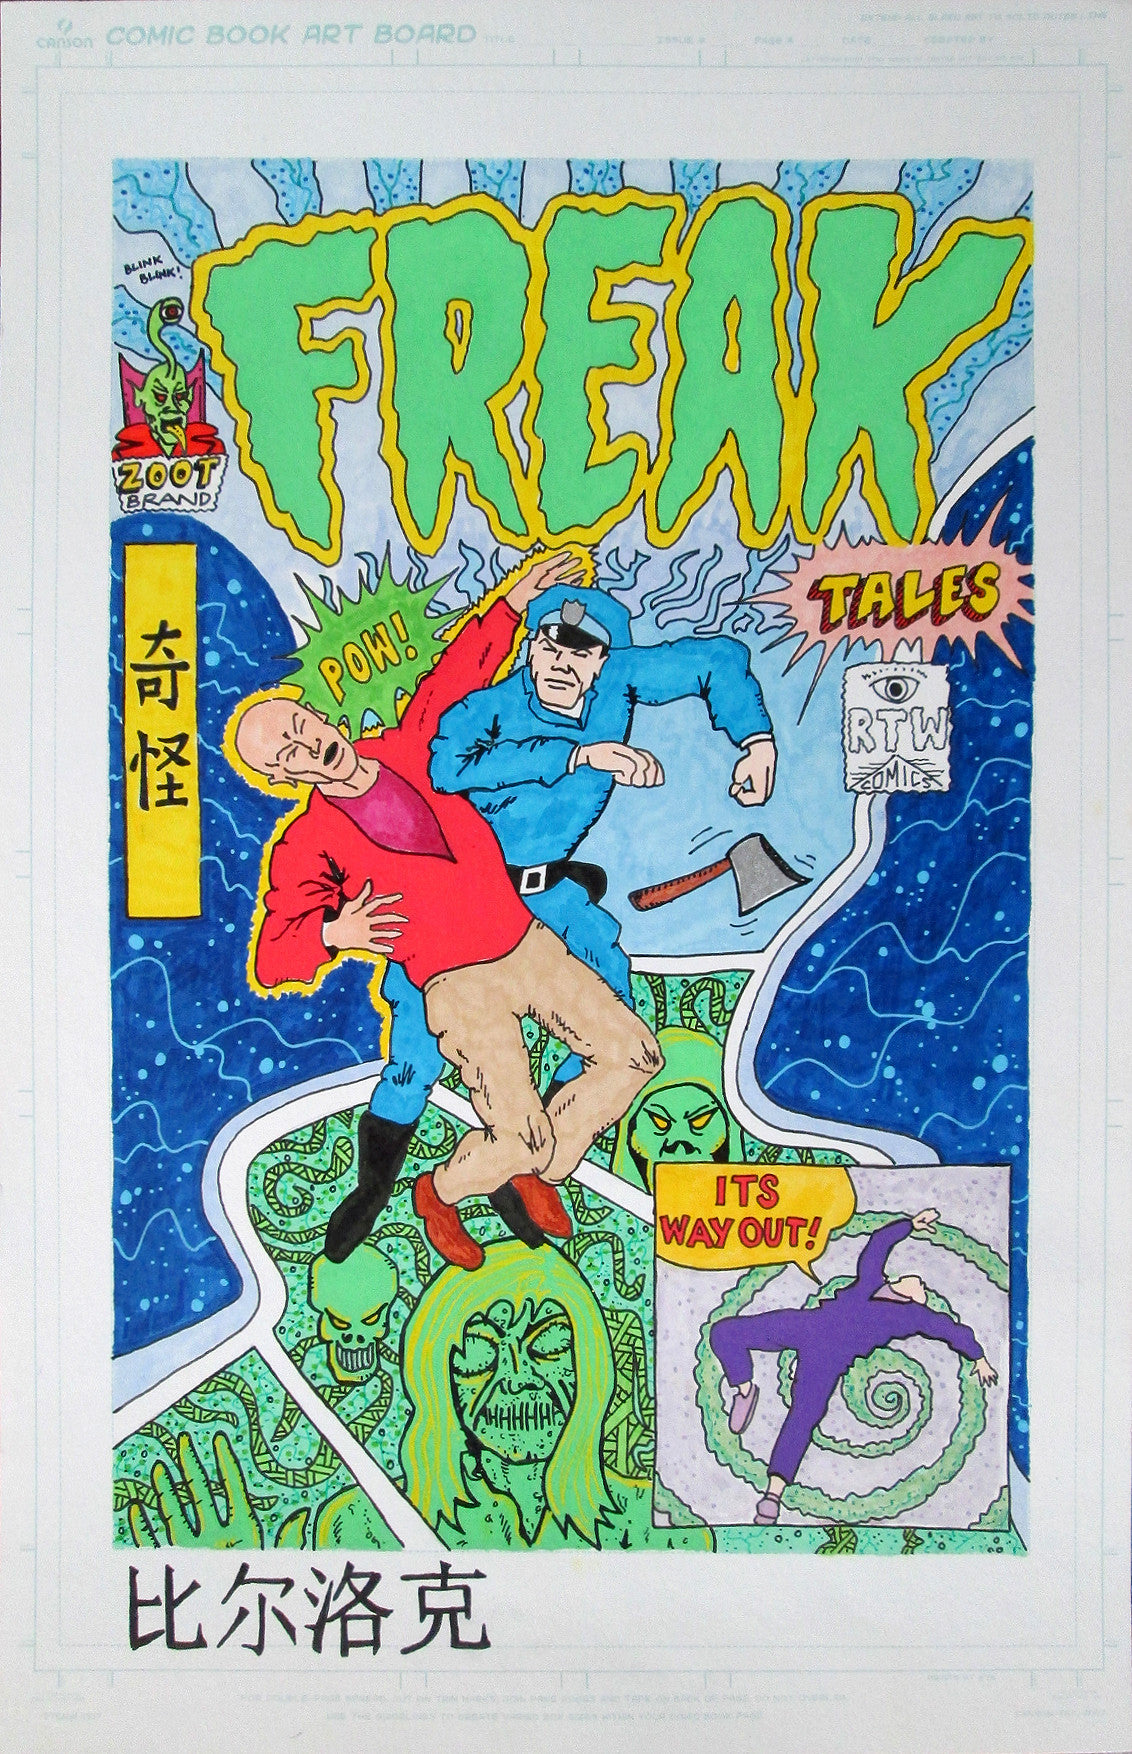 BILROCK RTW  -  "Freak tales"  RTW Comic